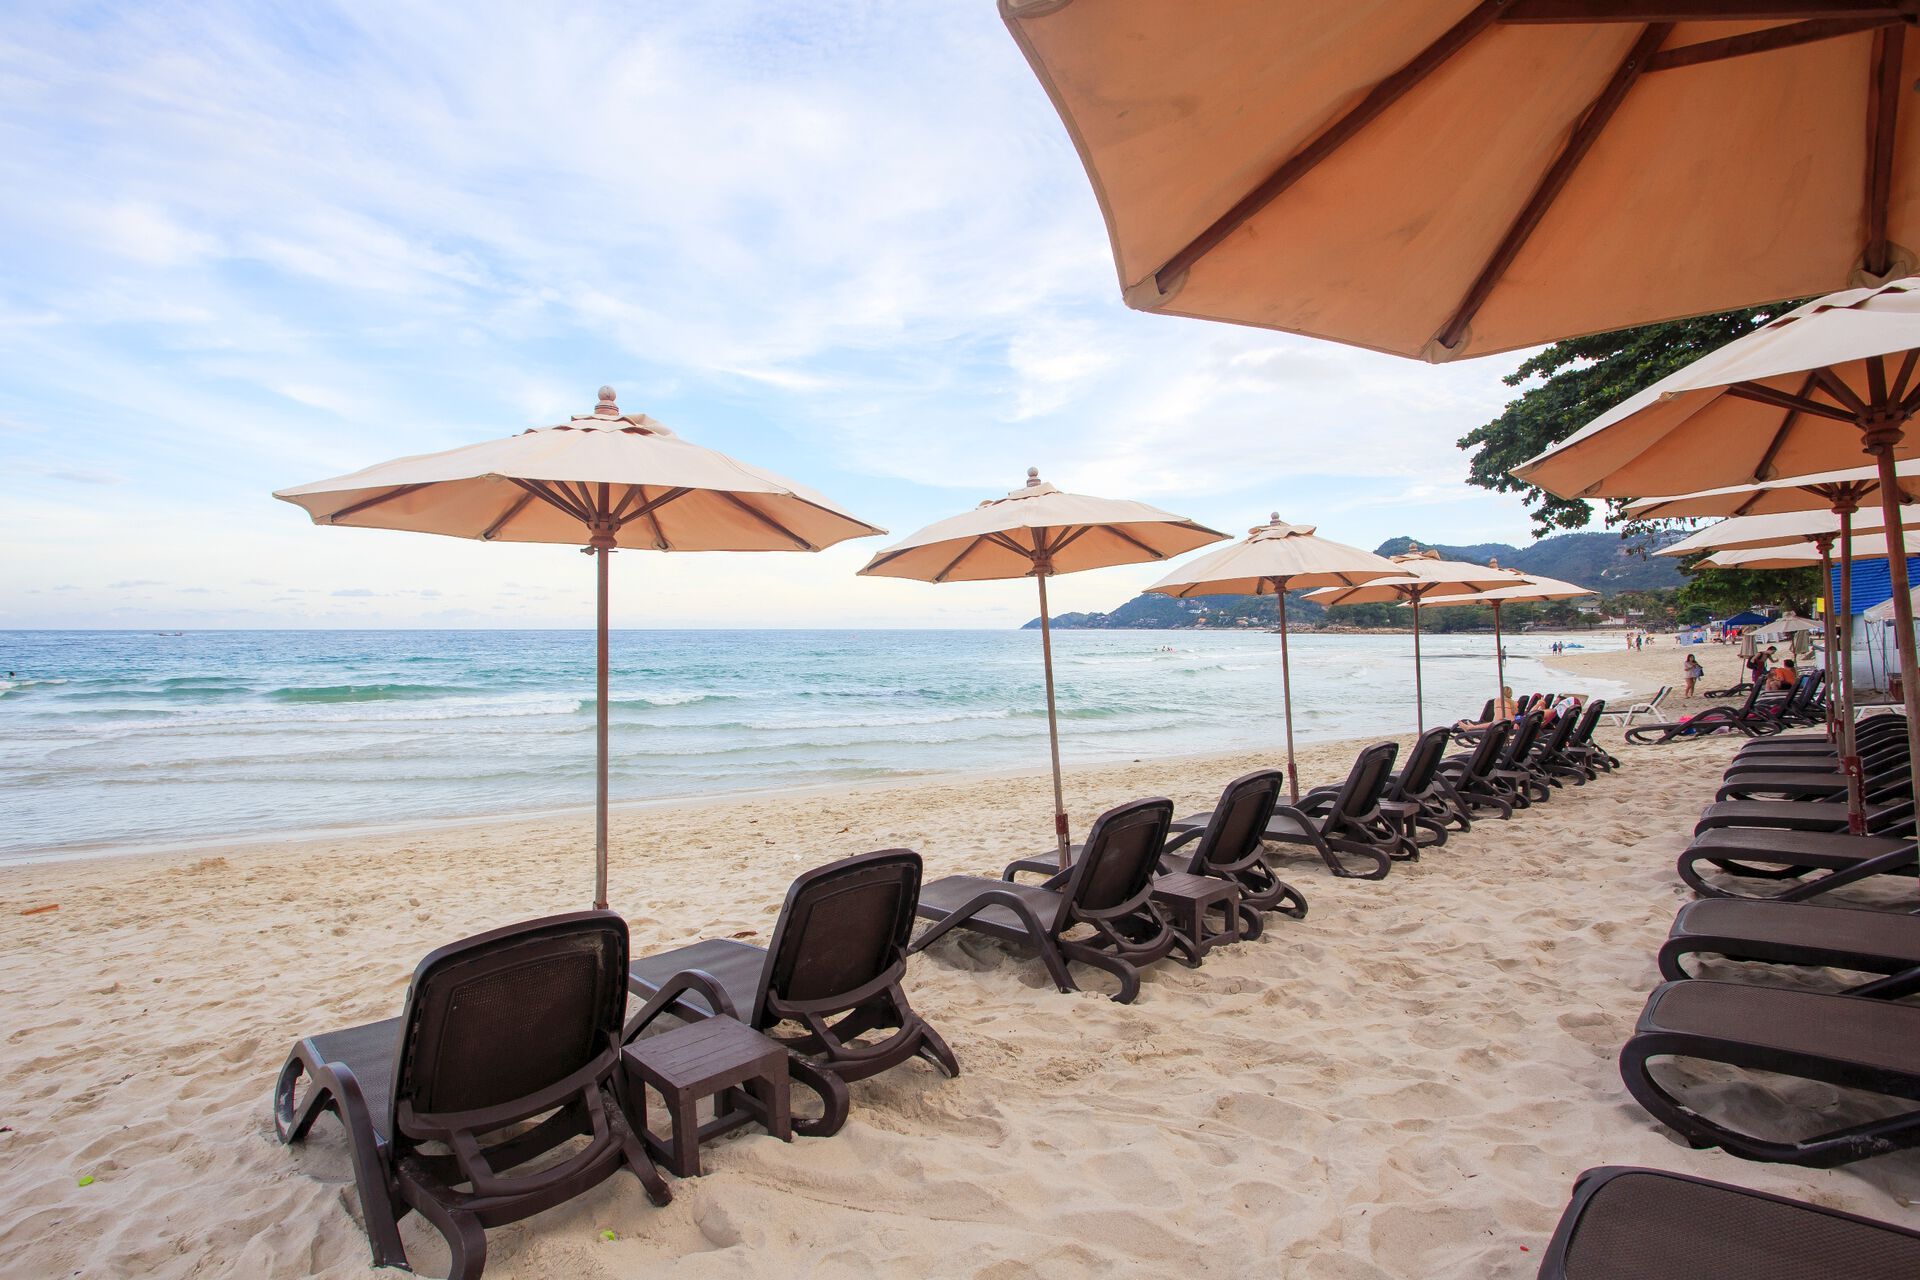 Thaïlande - Koh Samui - Hôtel Chaweng Cove Beach Resort 3*